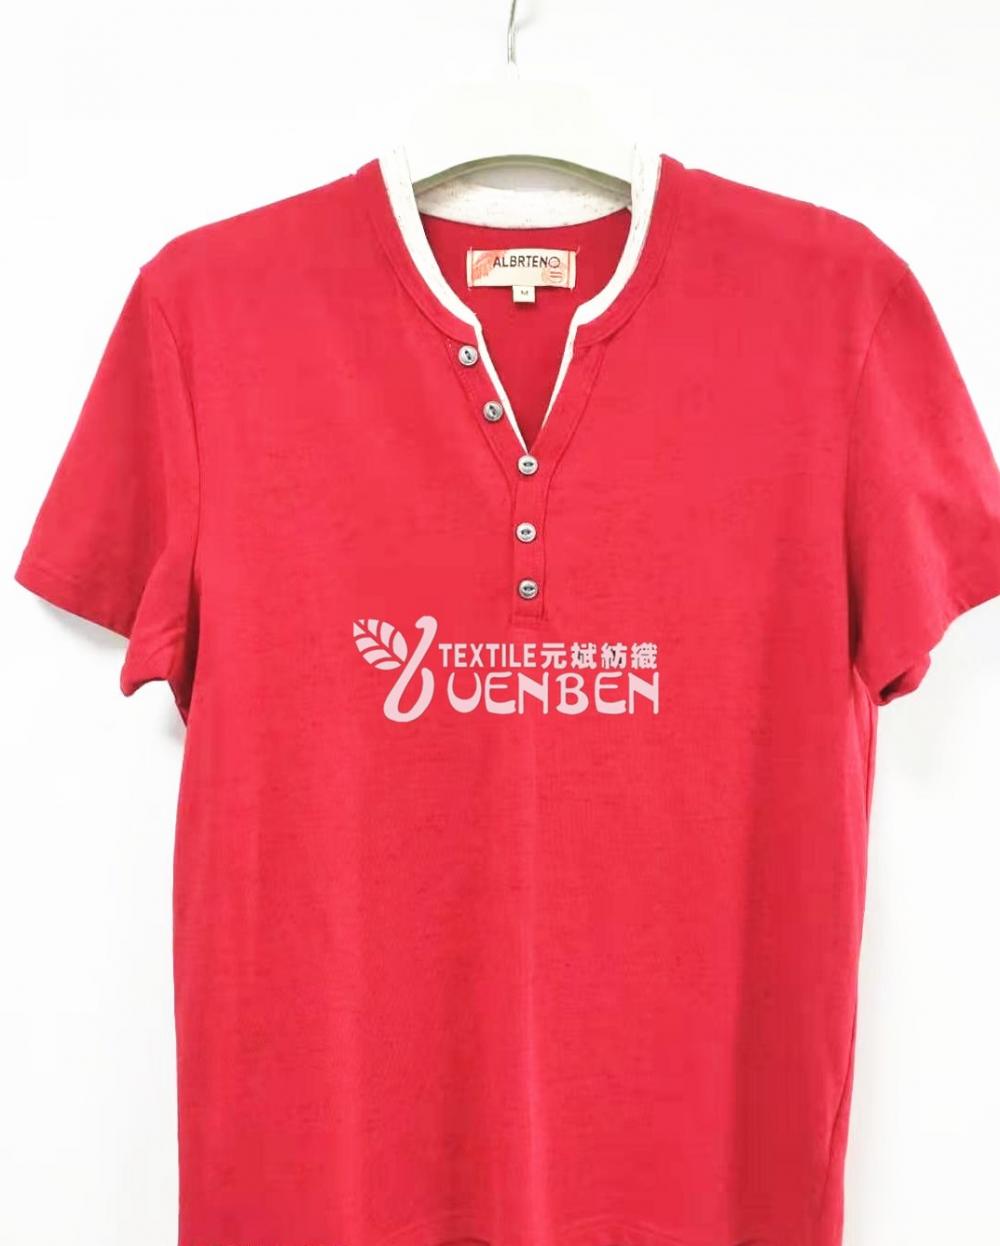 Camiseta masculina Melange Slub Jersey com decote em V